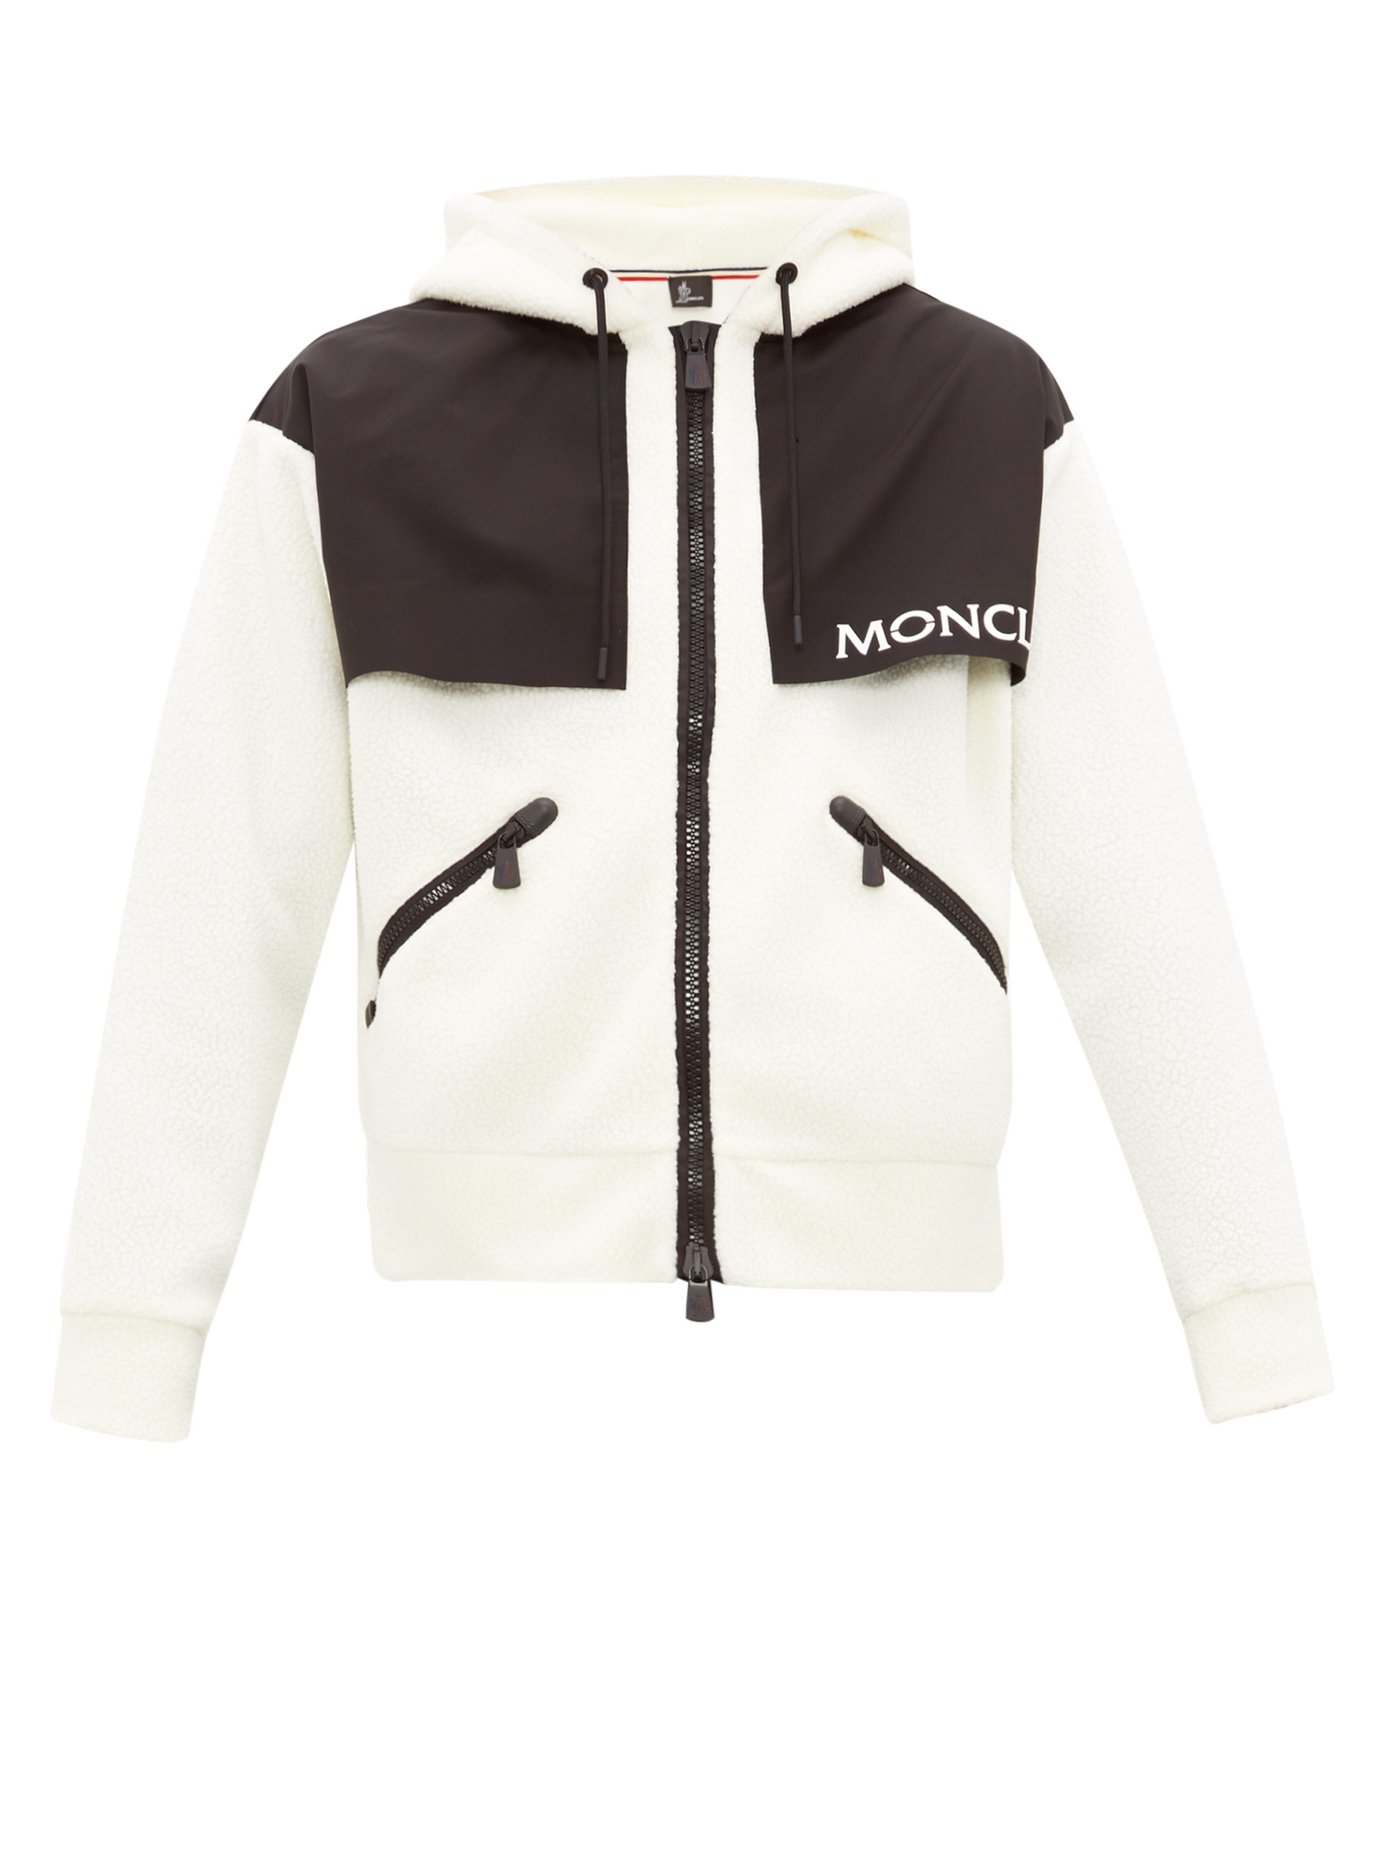 moncler ski jacket